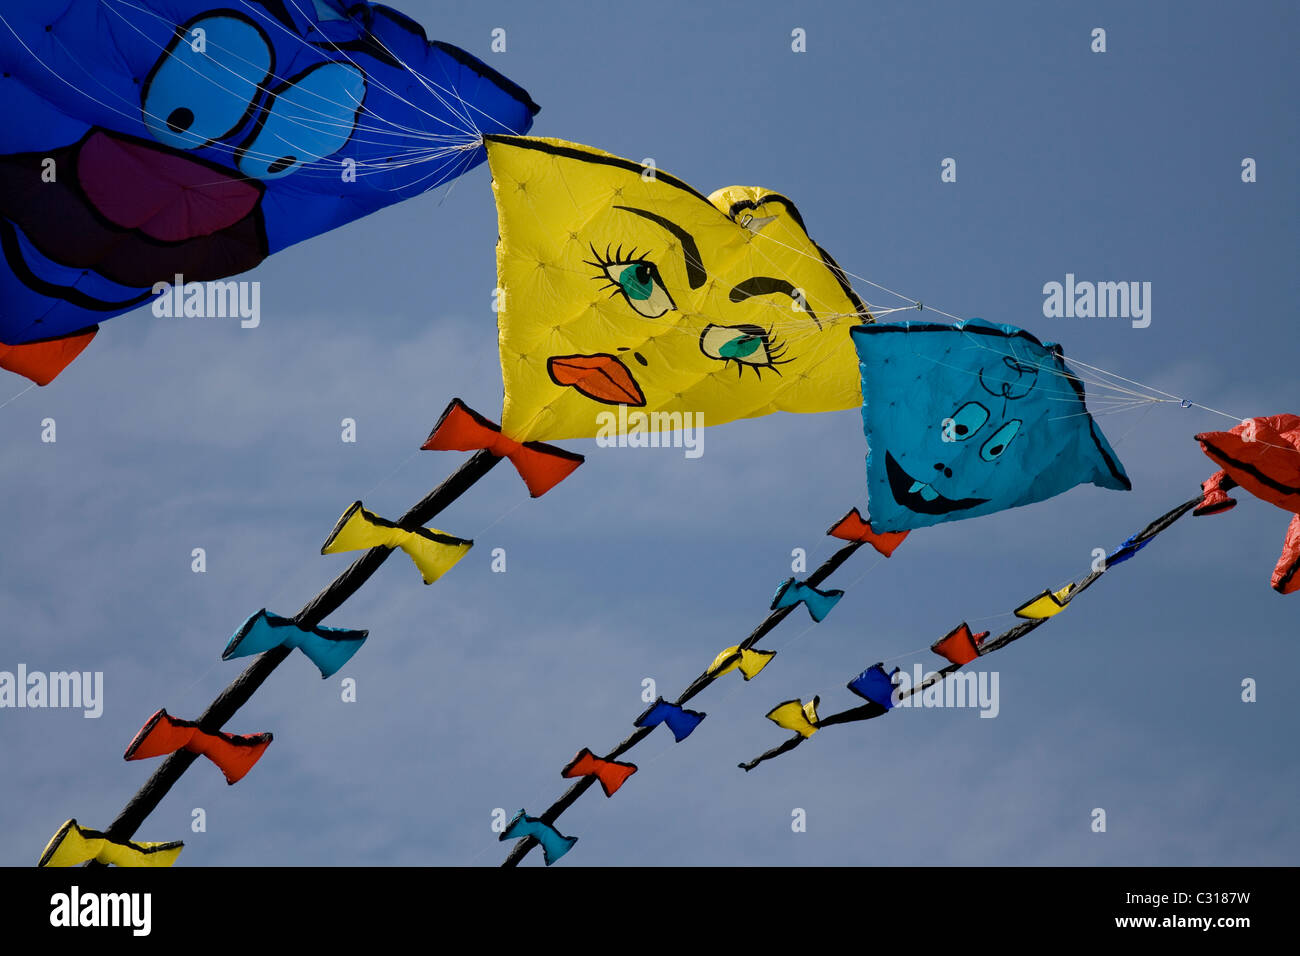 Four kites in a row at Streatham Park, family kite day. Stock Photo